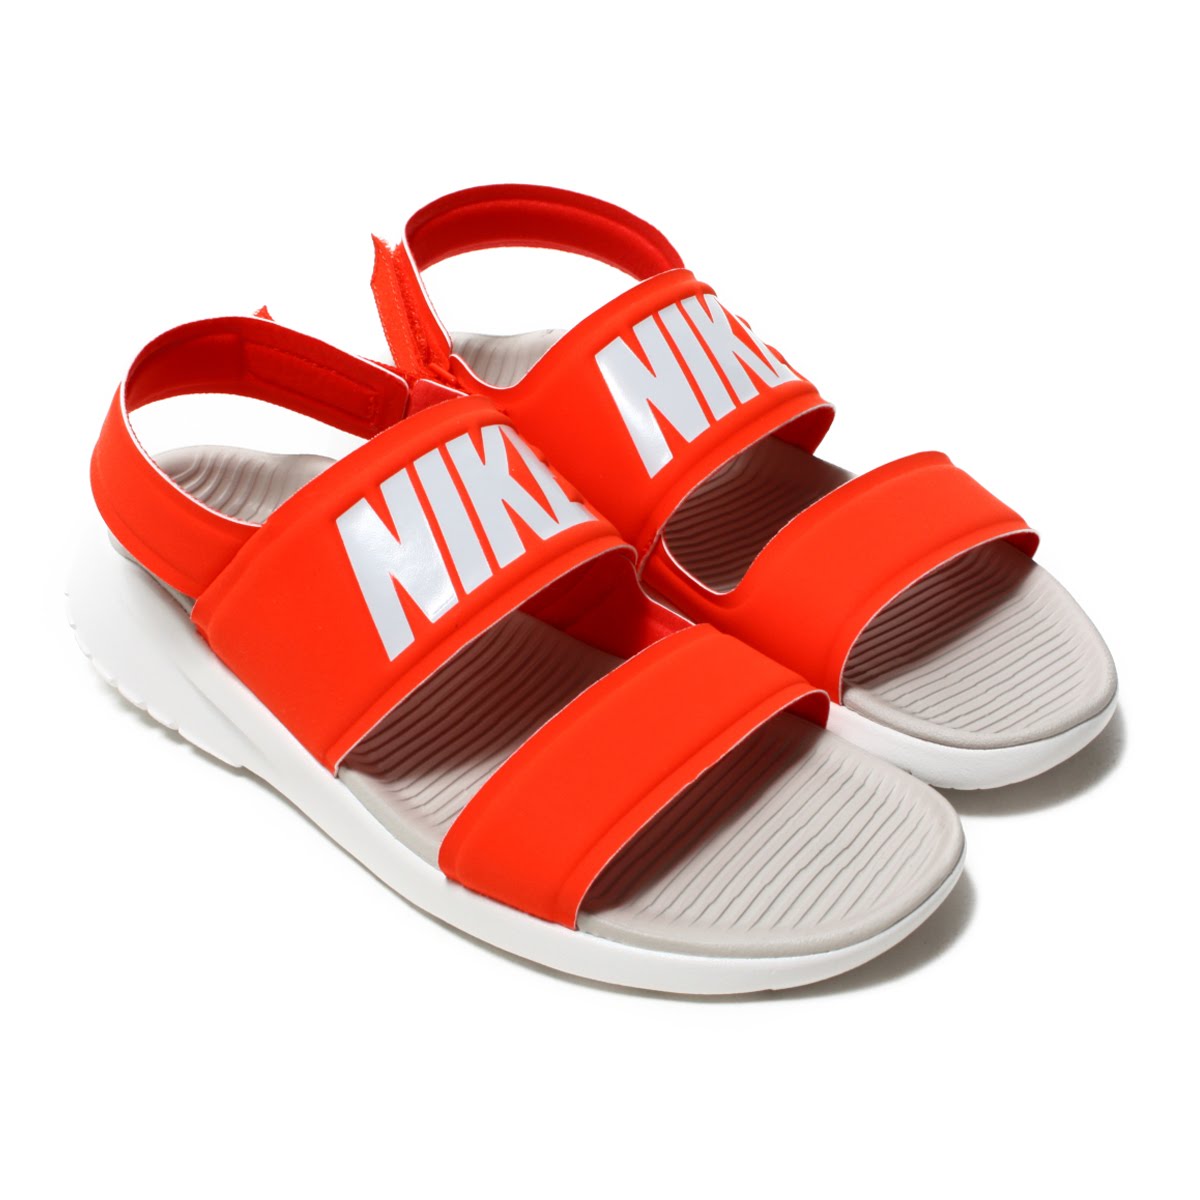 nike tanjun sandals womens price